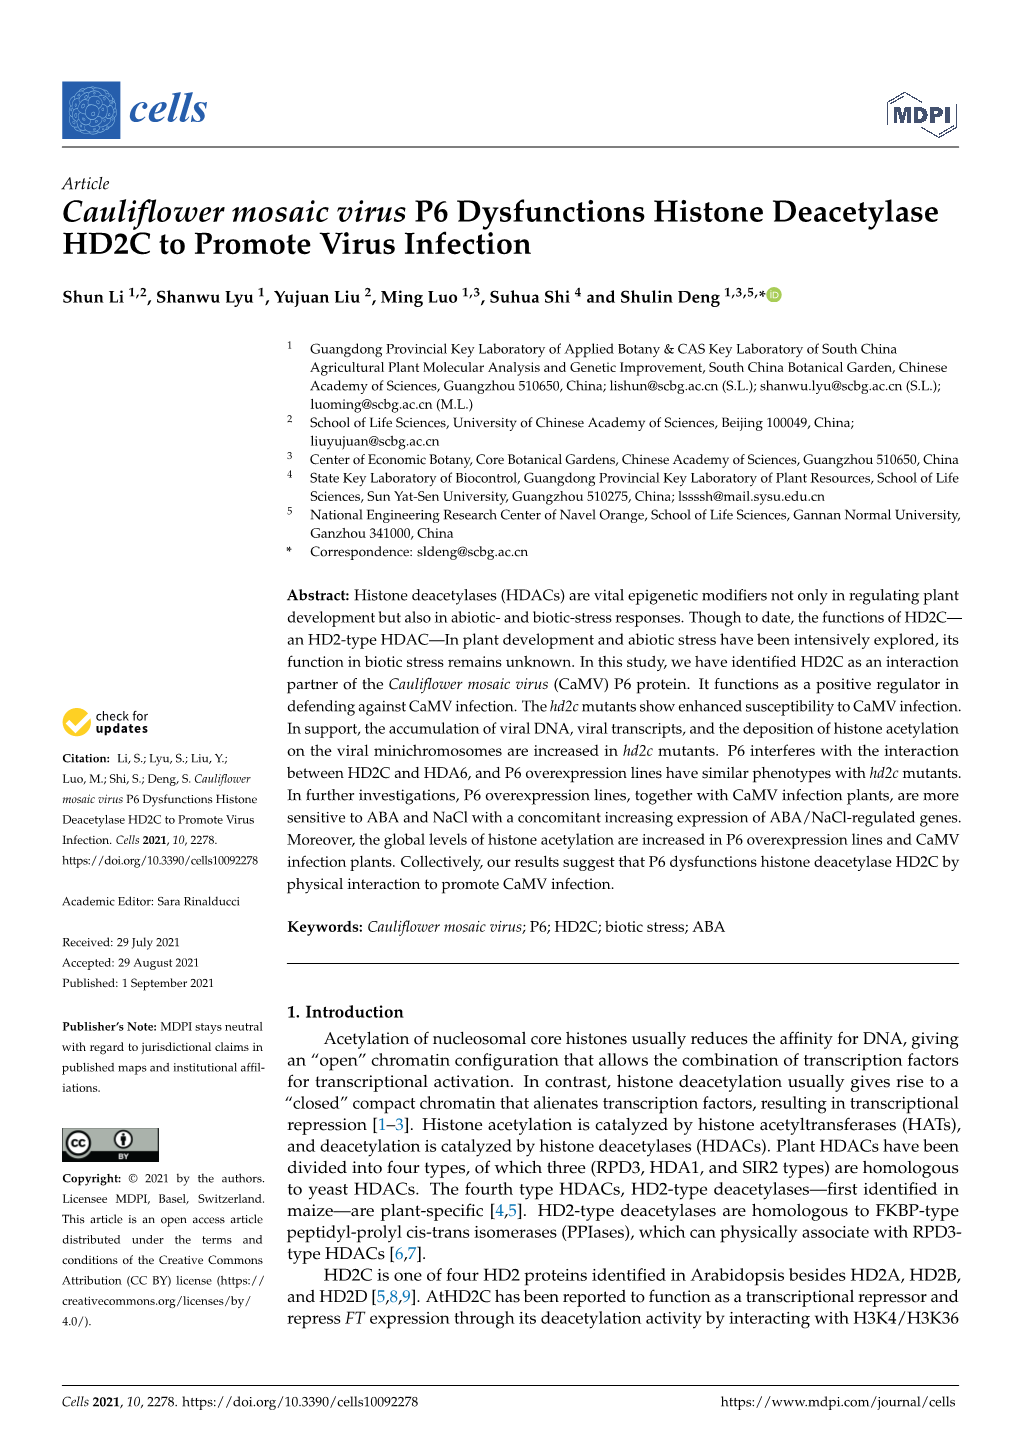 Cauliflower Mosaic Virus P6 Dysfunctions Histone Deacetylase